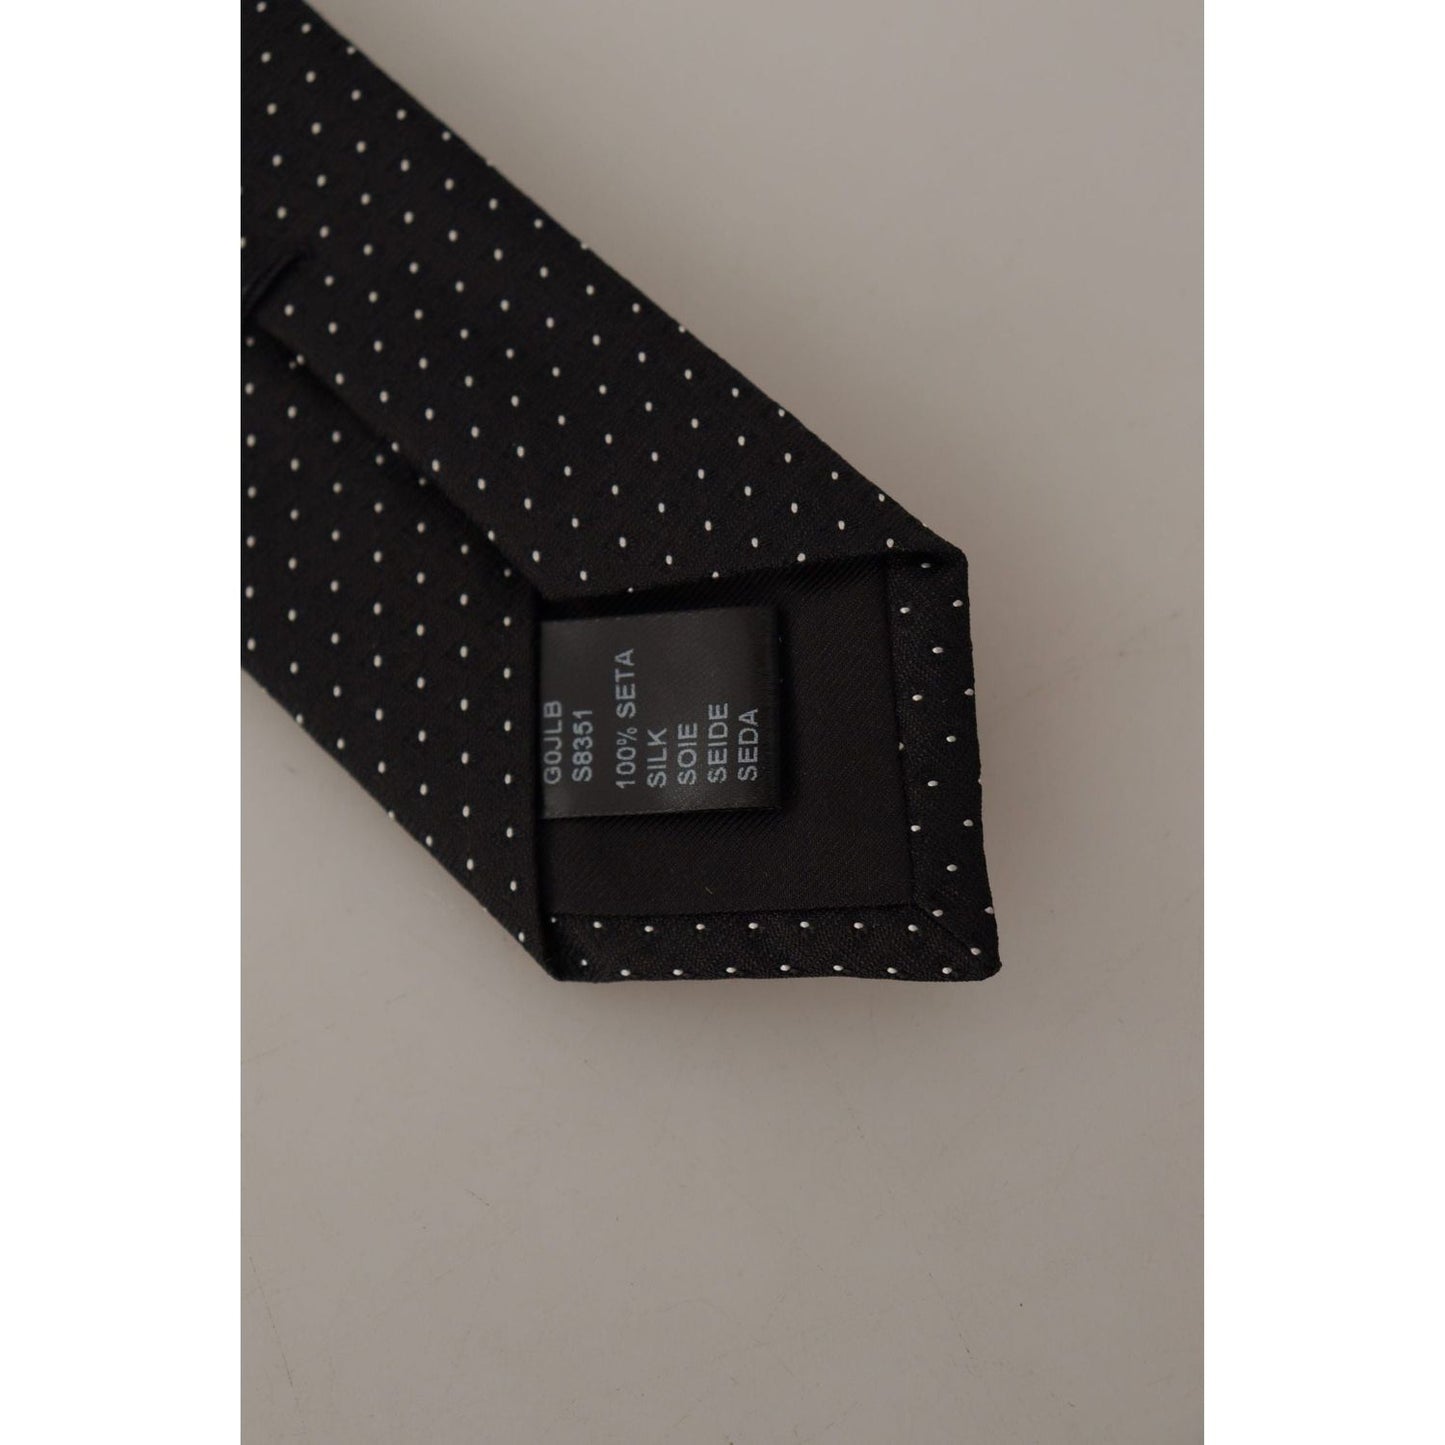 Dolce & Gabbana Elegant Polka Dot Silk Bow Tie black-white-polka-dots-silk-adjustable-tie